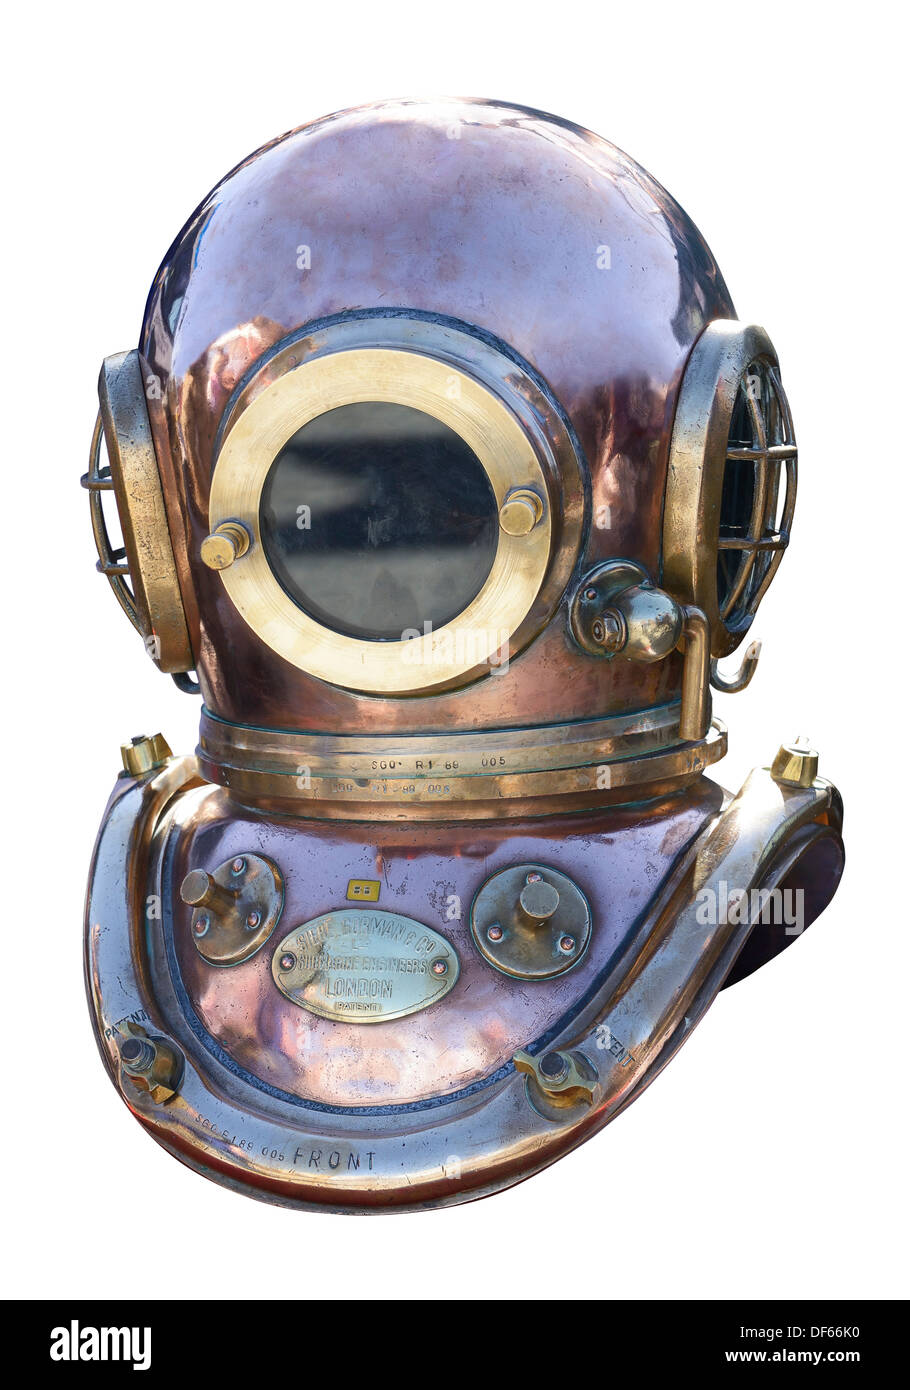 Vintage Retro casco de buceo en mar profundo de latón Foto de stock